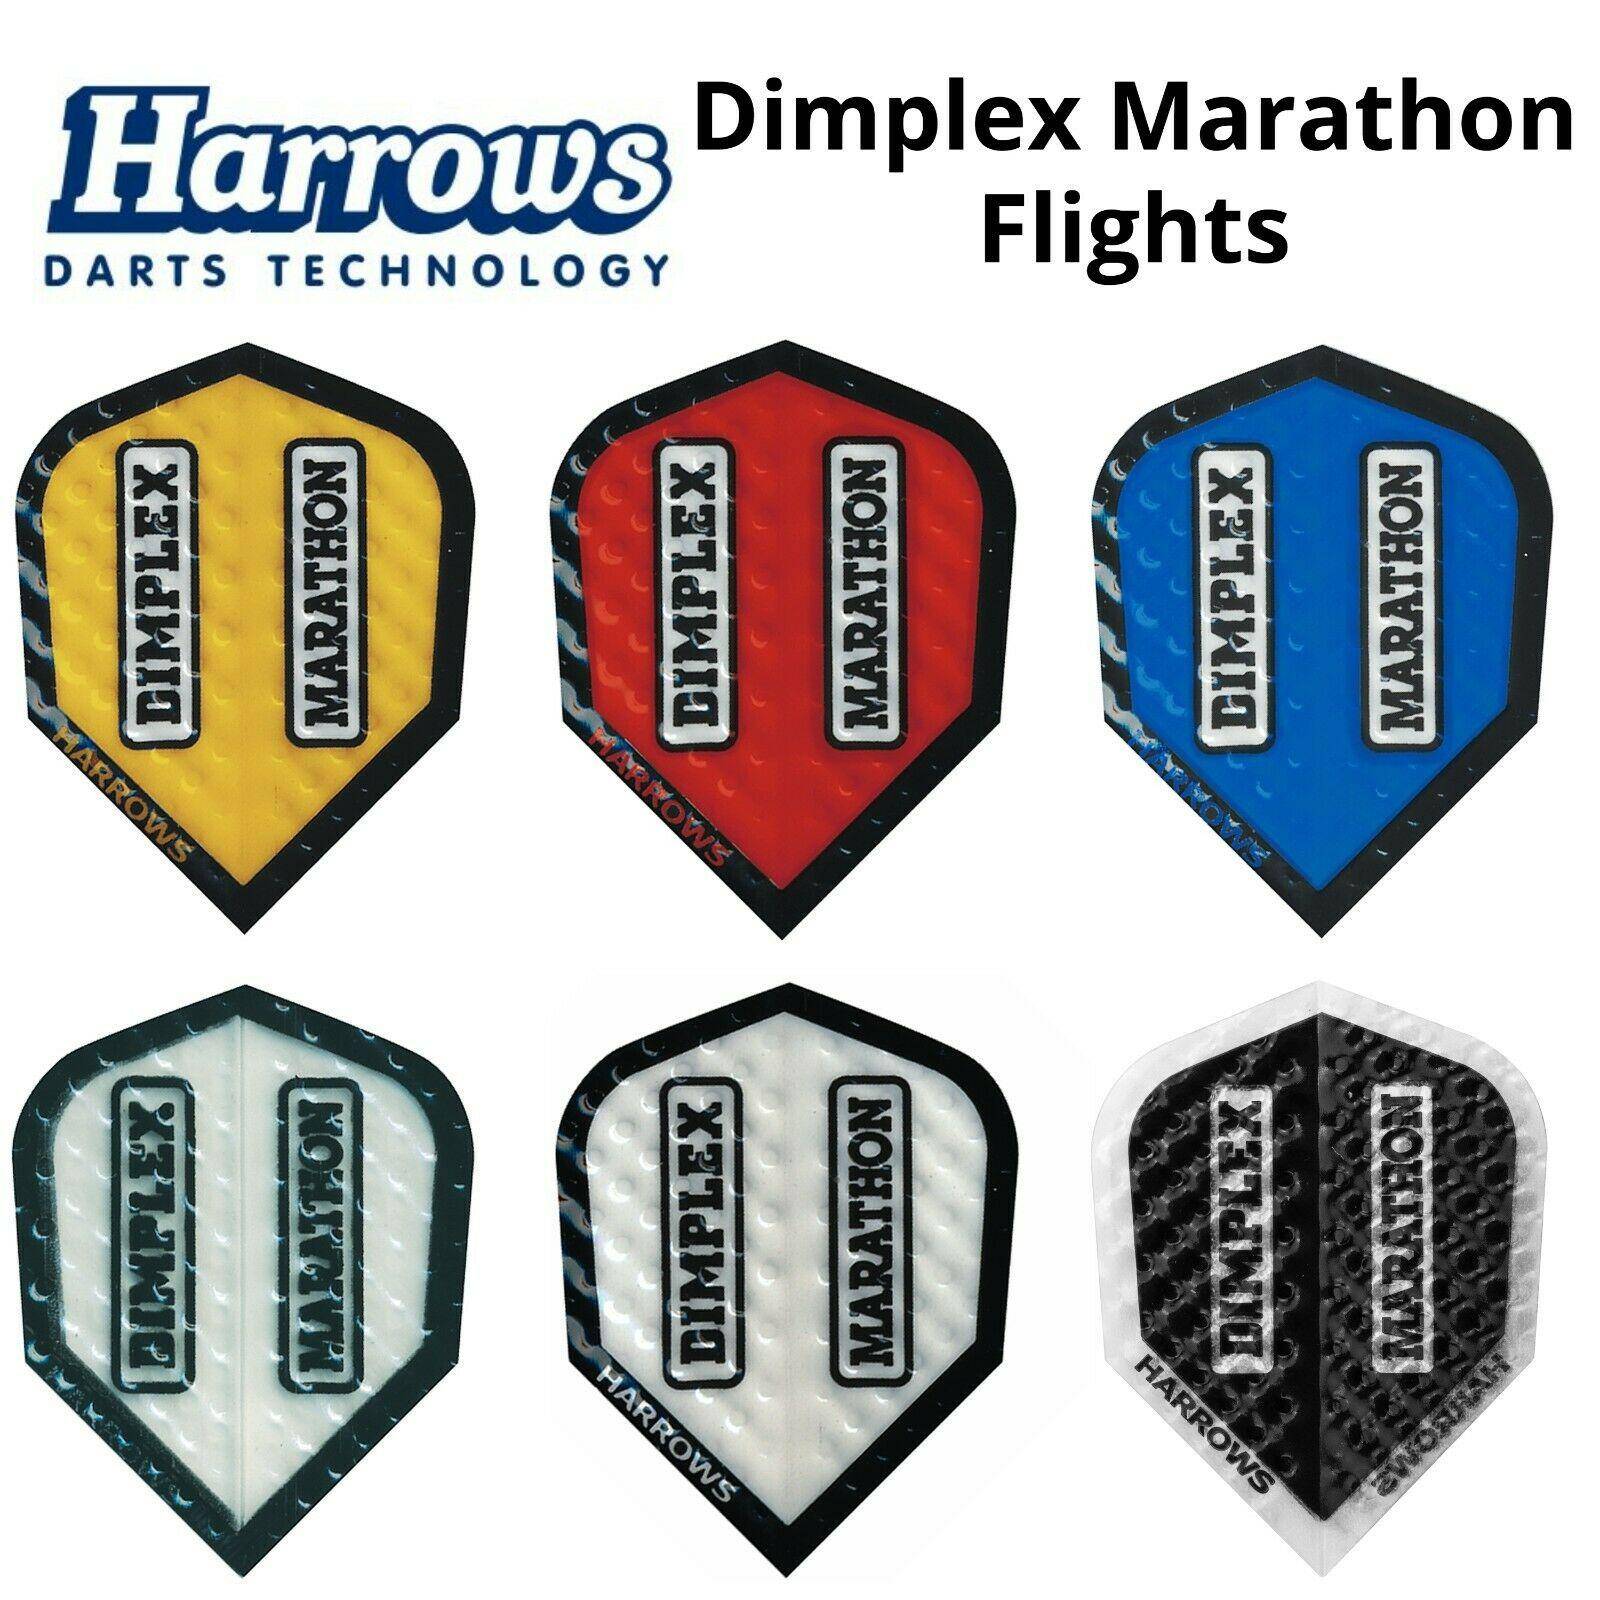 Harrows Dimplex Marathon Flights